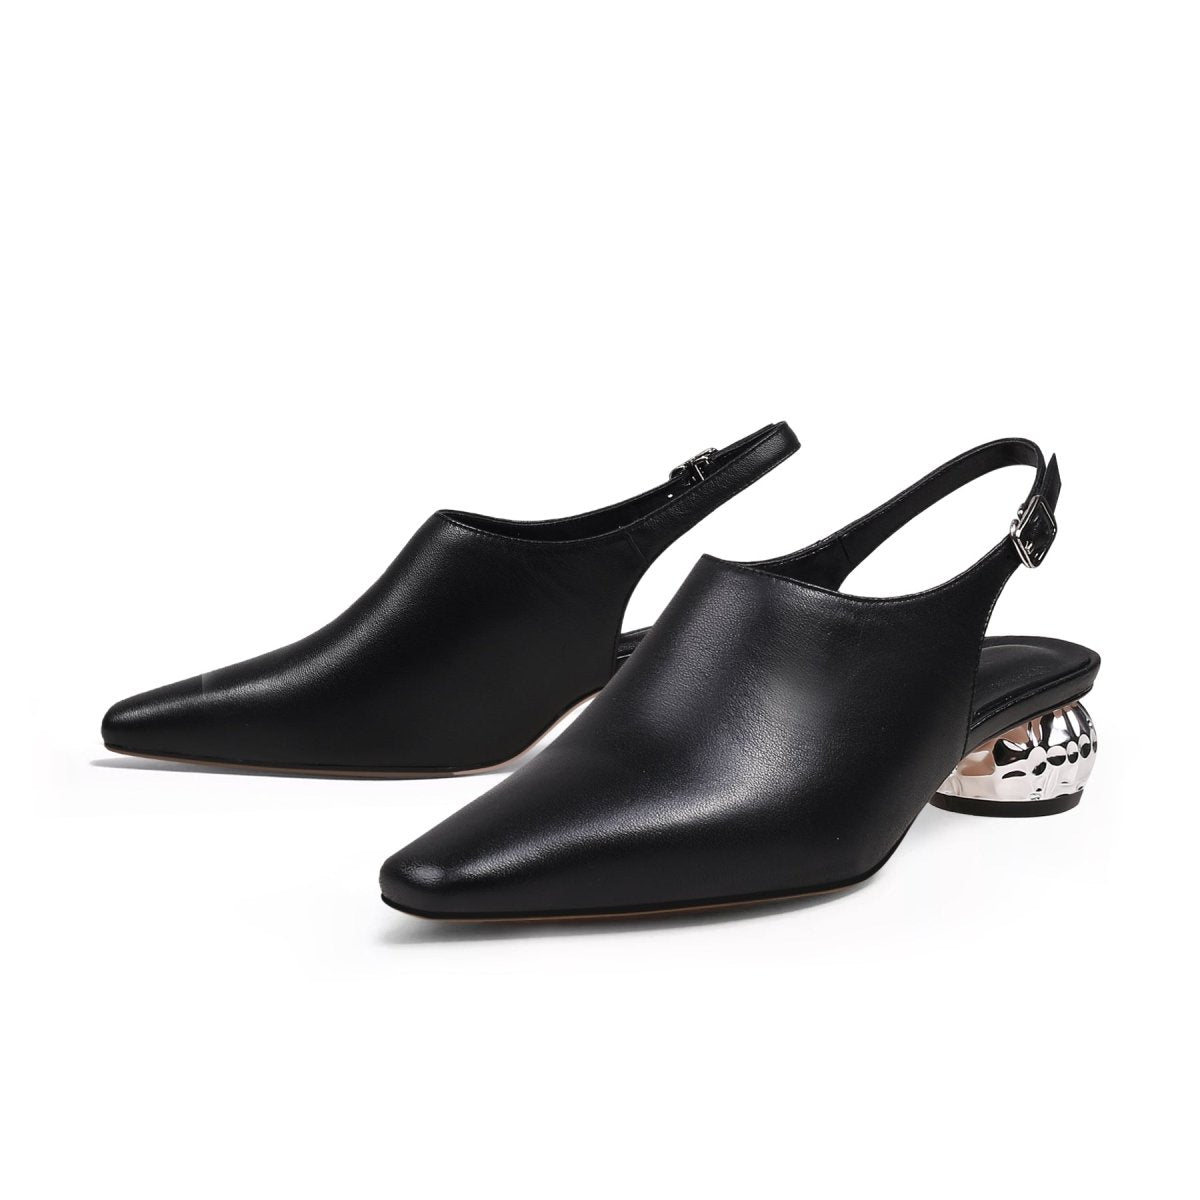 Fashion Queen Black Sandals - 0cm